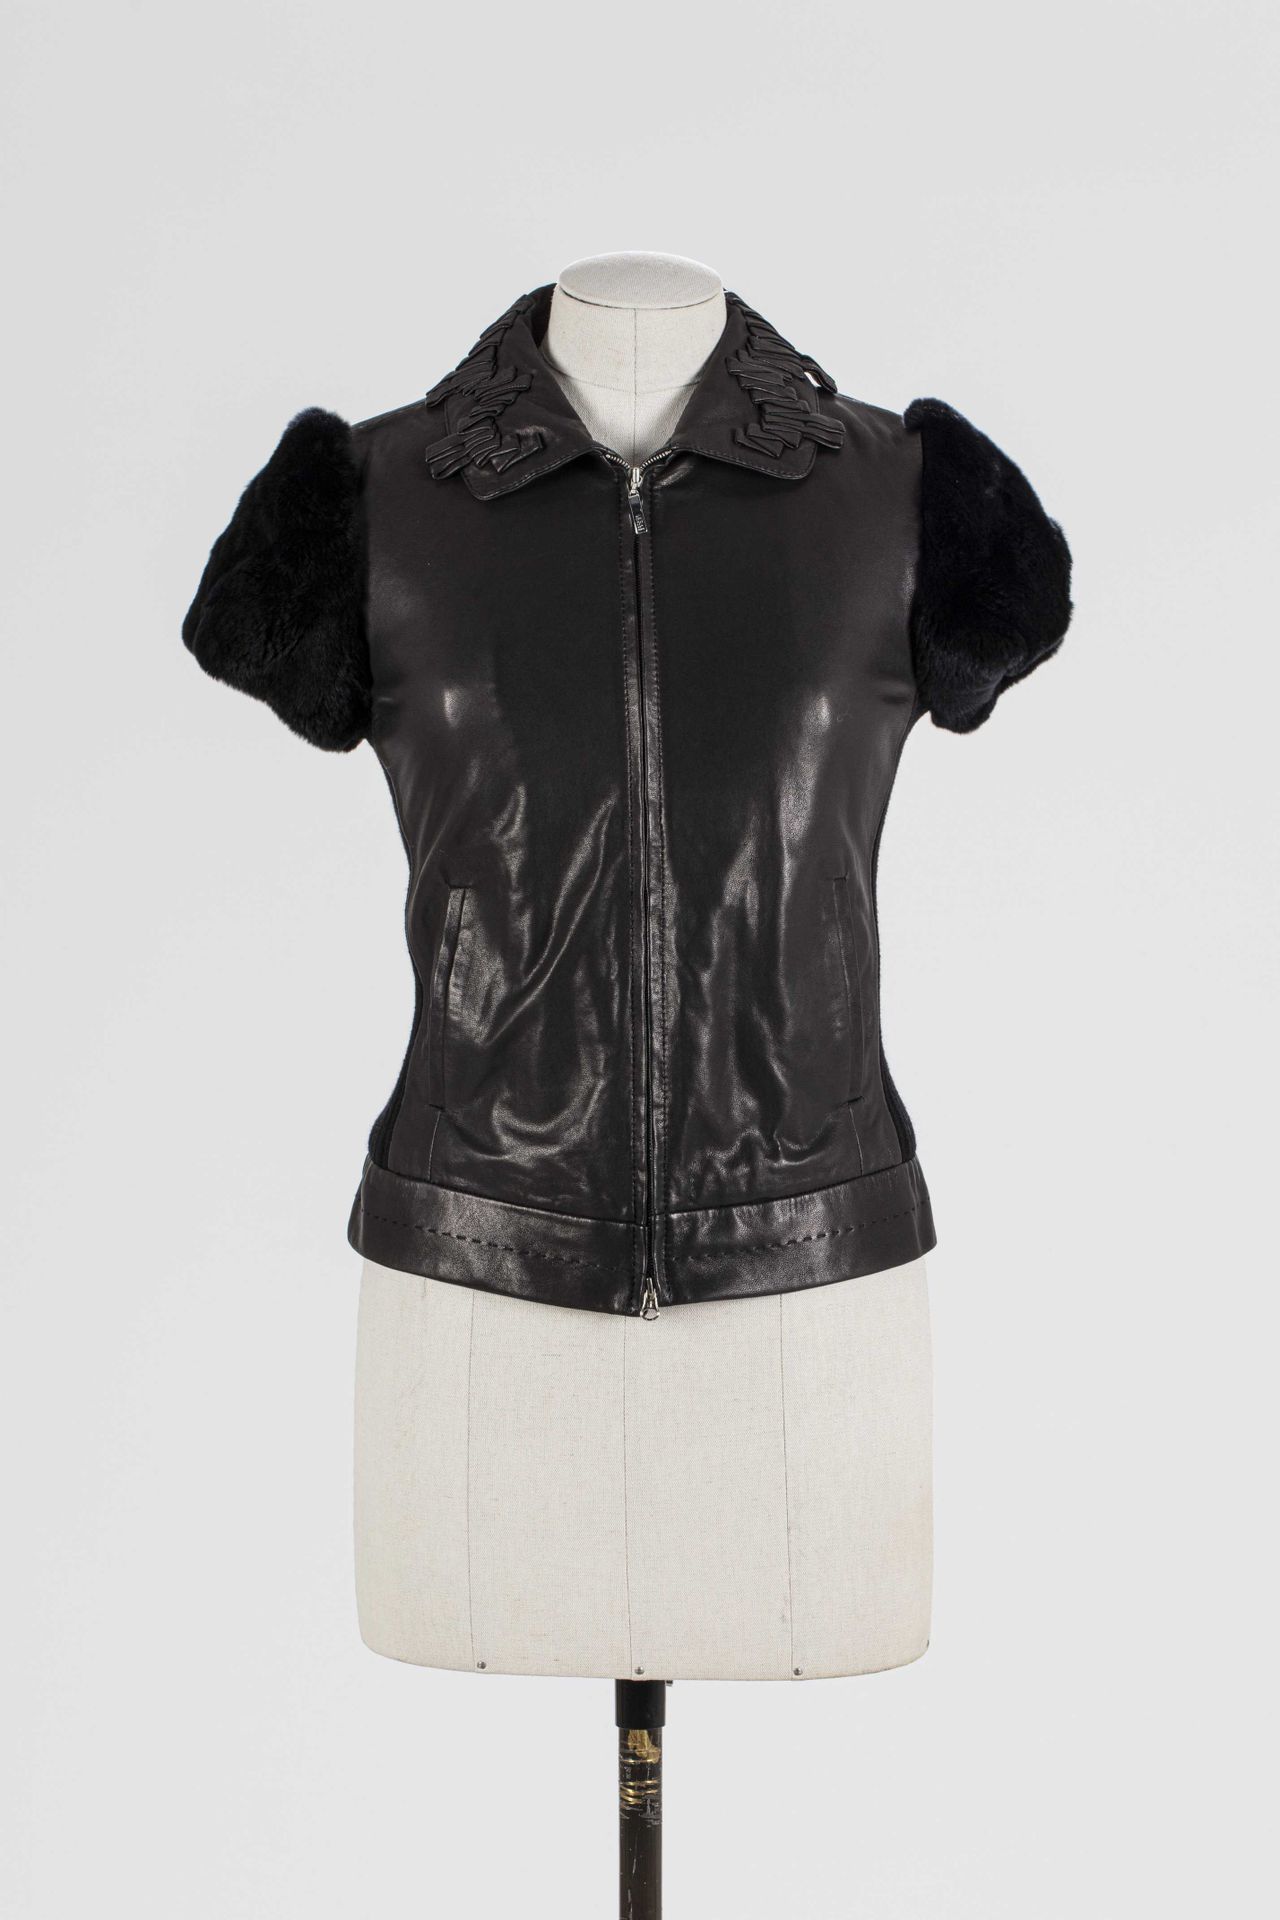 Null ESCADA Sport：黑色皮夹克，短袖带毛边，黑色羊毛侧条纹，两个贴袋，领口有皮带装饰。

T.34